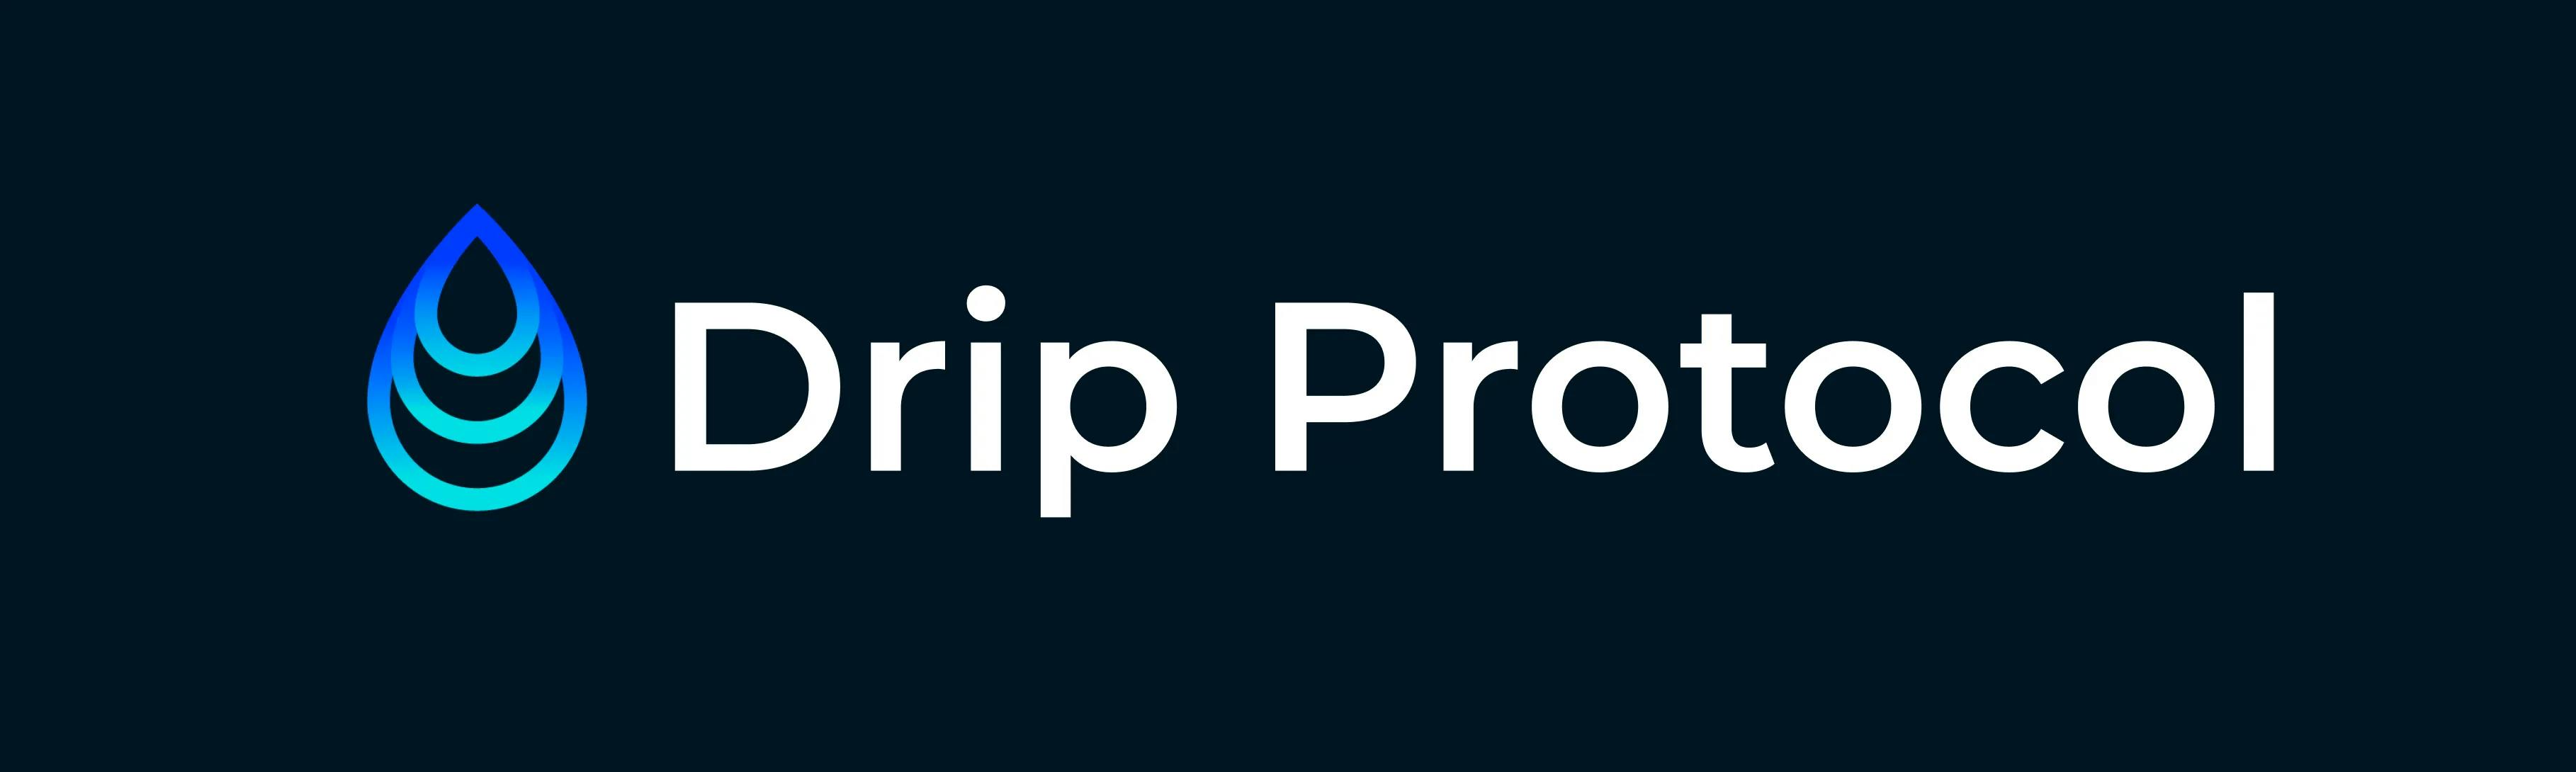 Drip Protocol